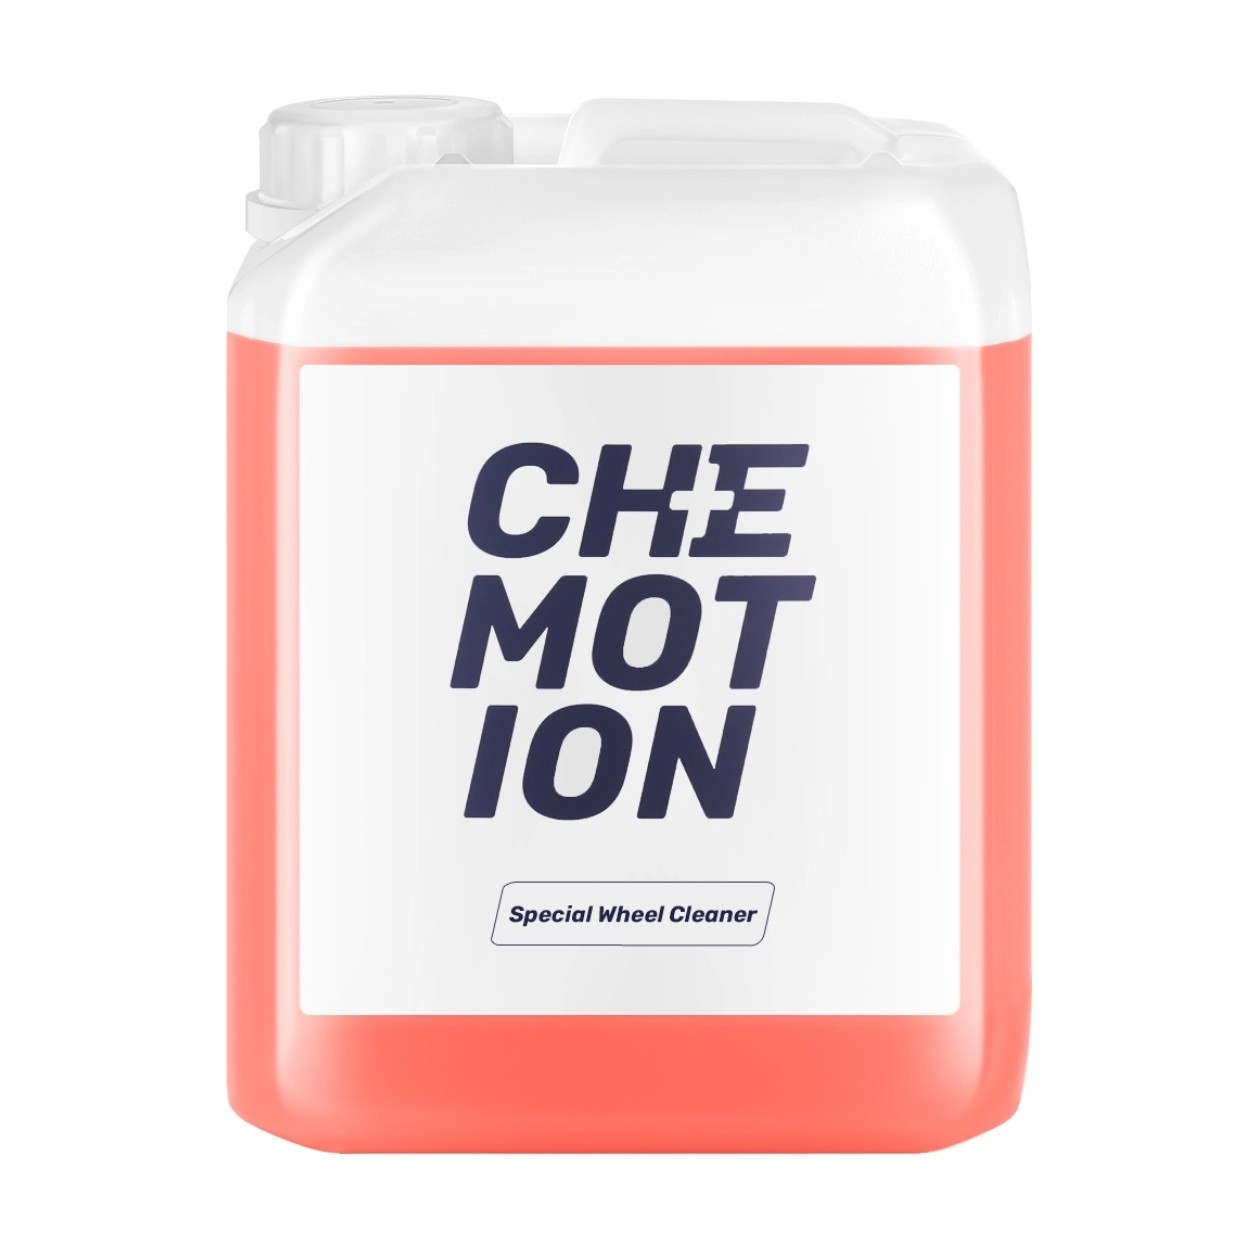 Čistič kol Chemotion Special Wheel Cleaner (5000 ml)